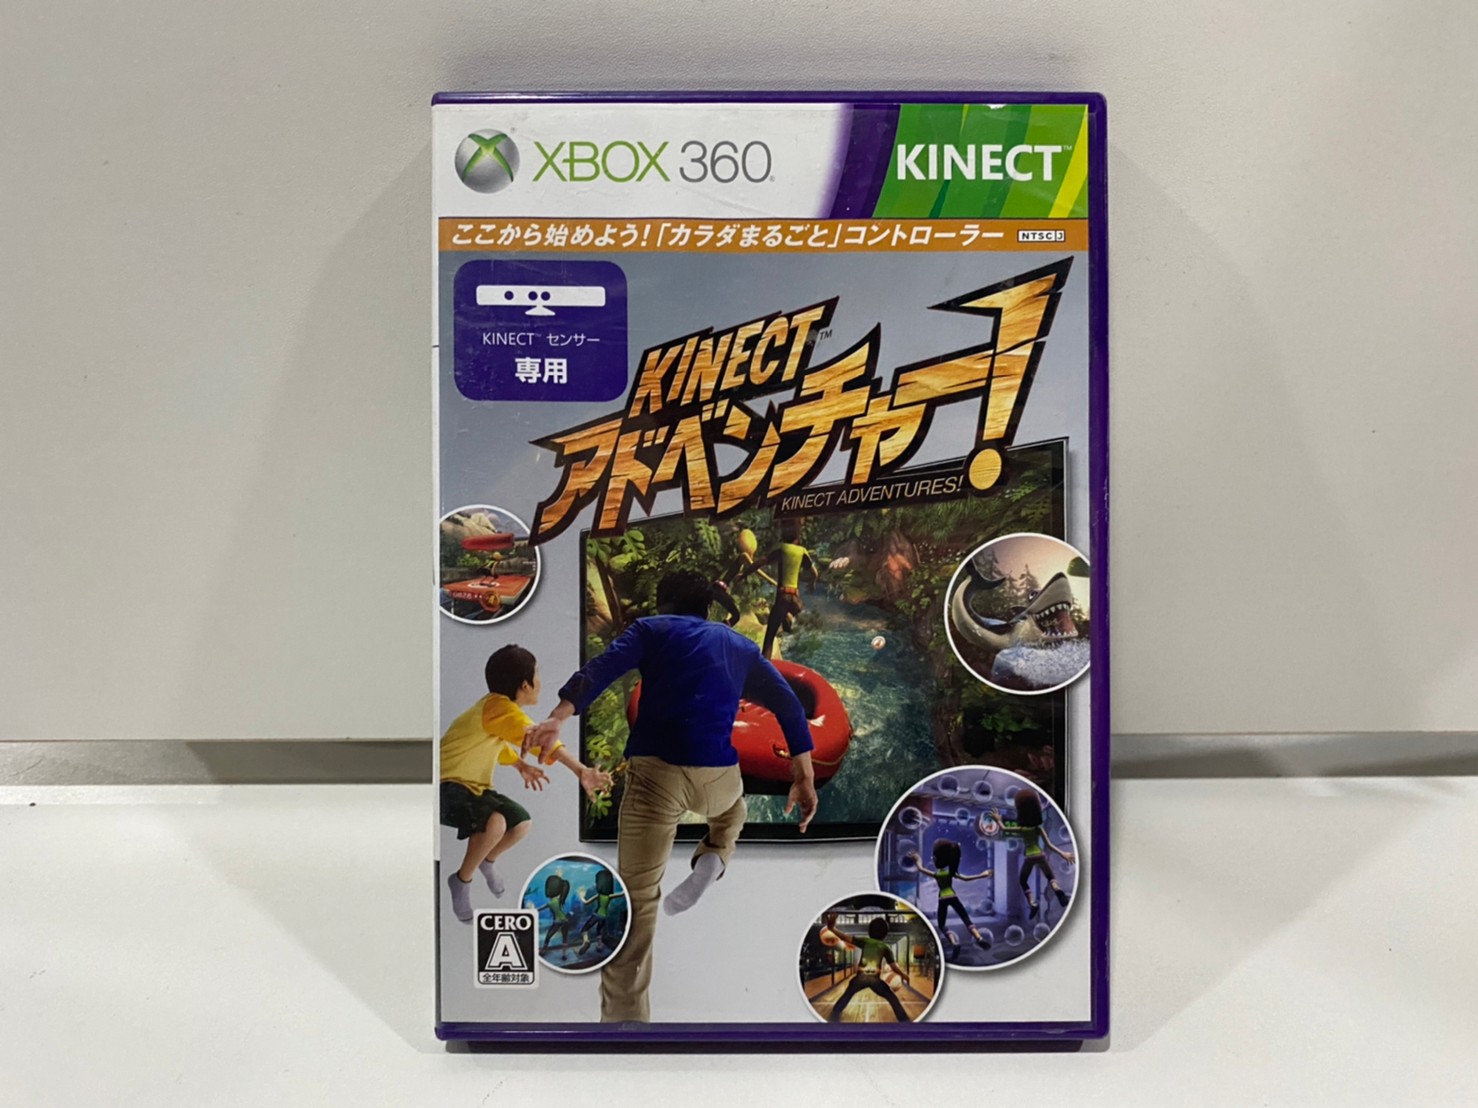 Xbox360 Kinect - ウォール キネクト Mount Wall